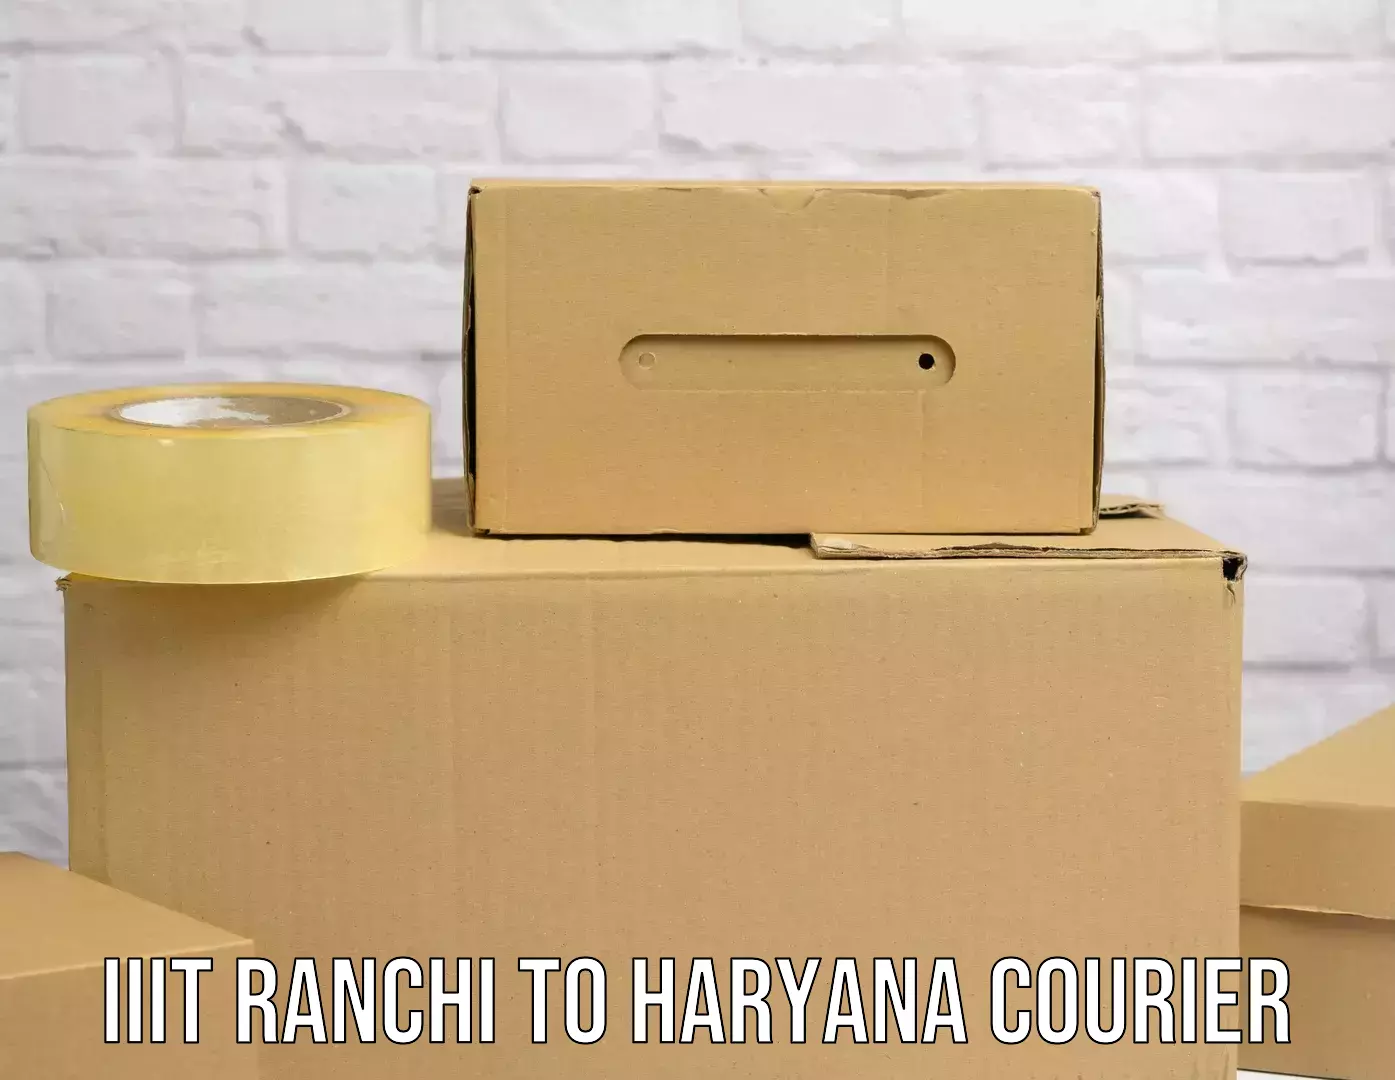 Short distance delivery IIIT Ranchi to Chirya